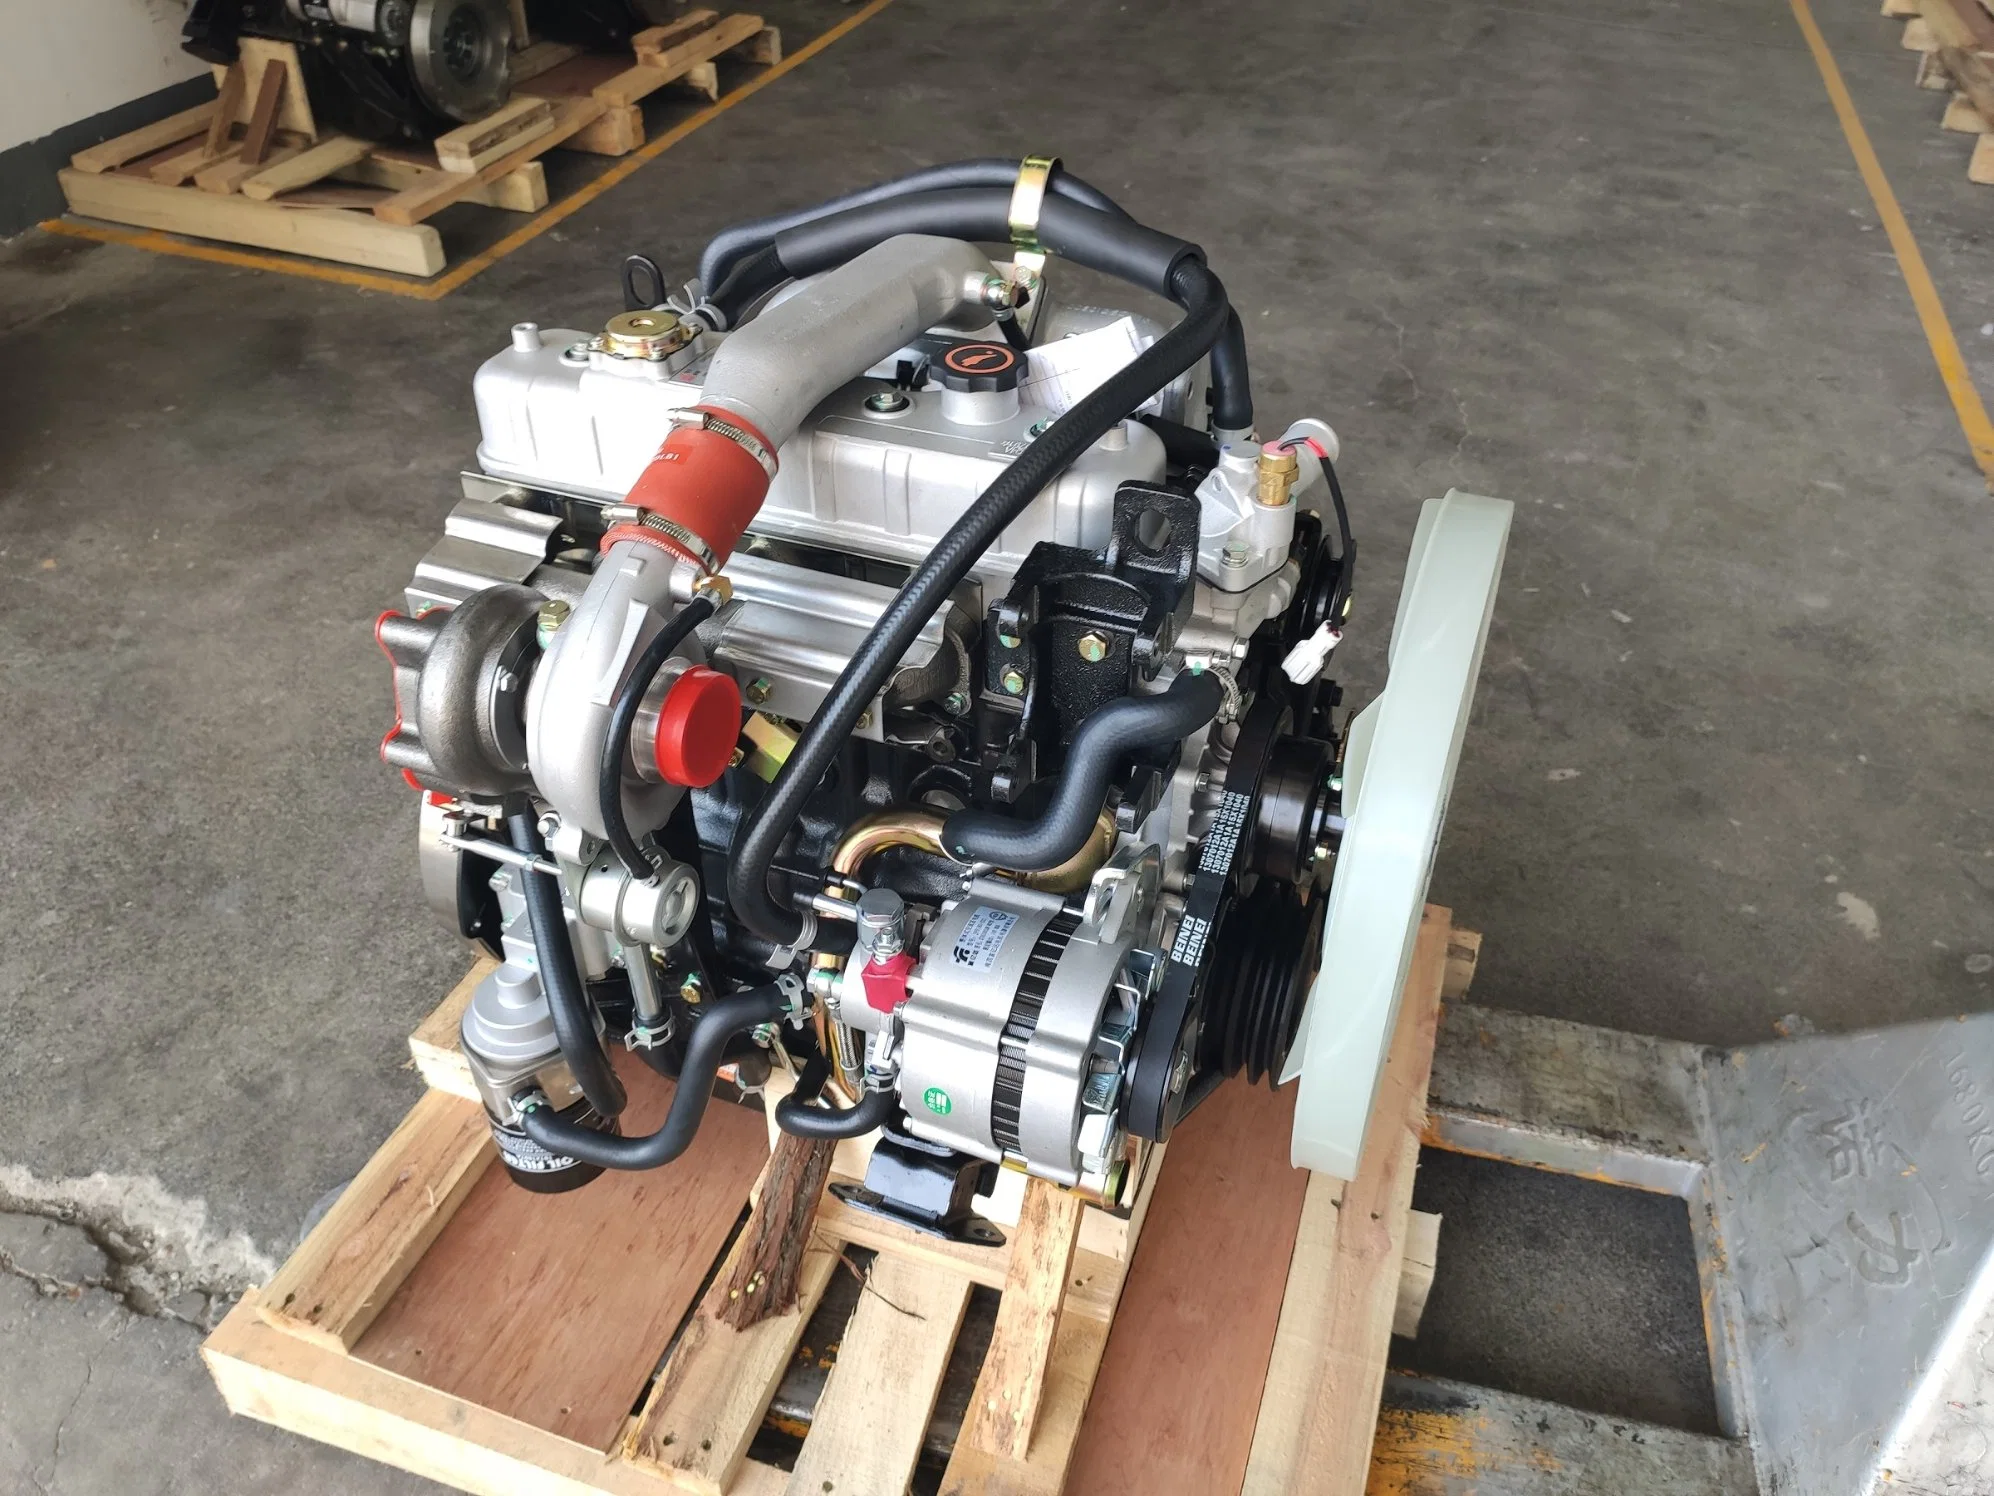 68kw Isuzu Diesel Engine 4jb1t/4jb1 for Vehicle/Forklift Marine Diesel Engine Boat Motor Engine 4 Strokes for Fishing Ship Water Cooled Diesel Engine